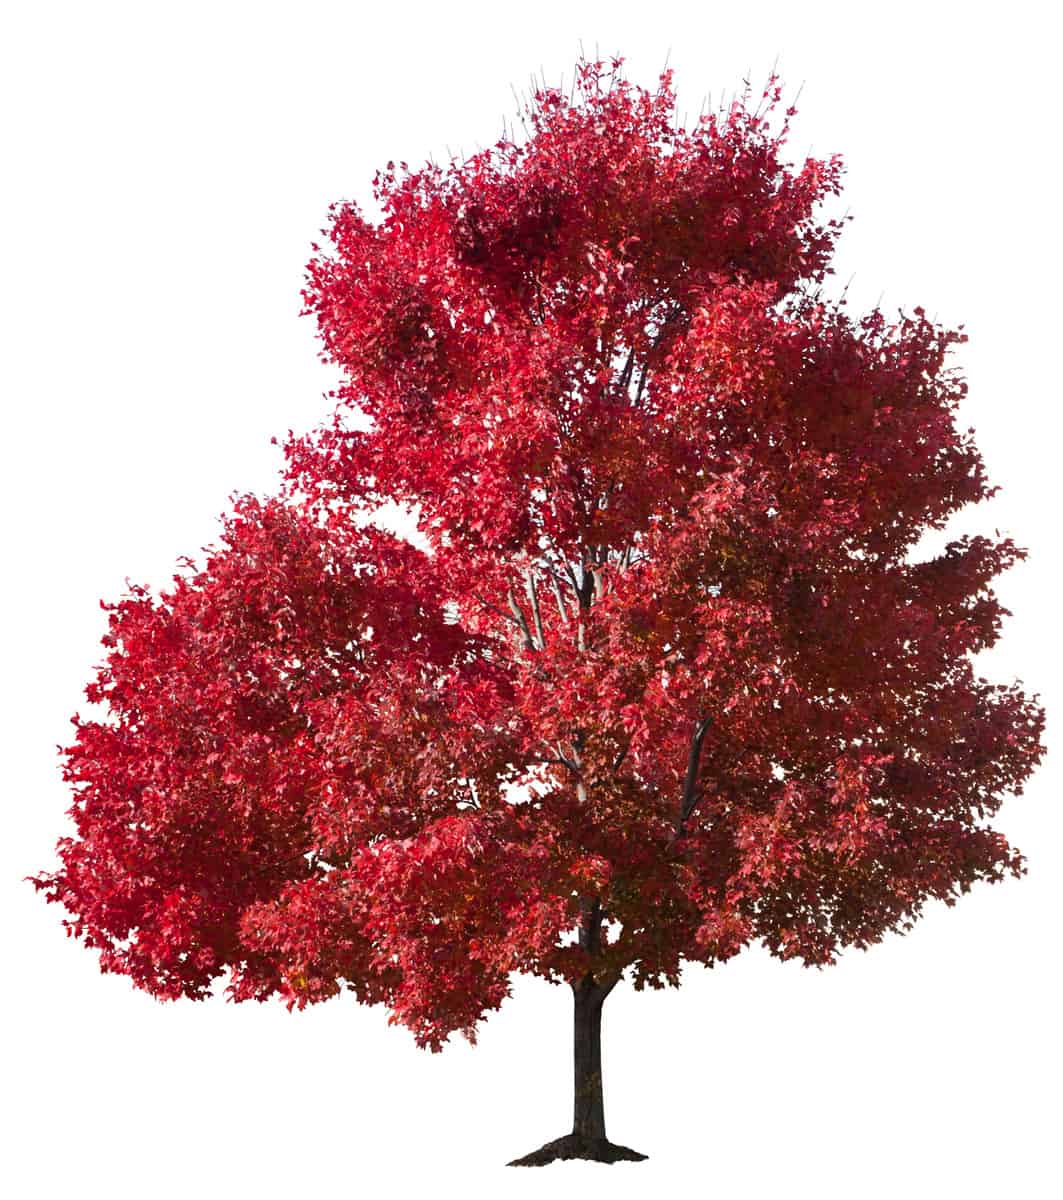 Autumn Red Maple Tree